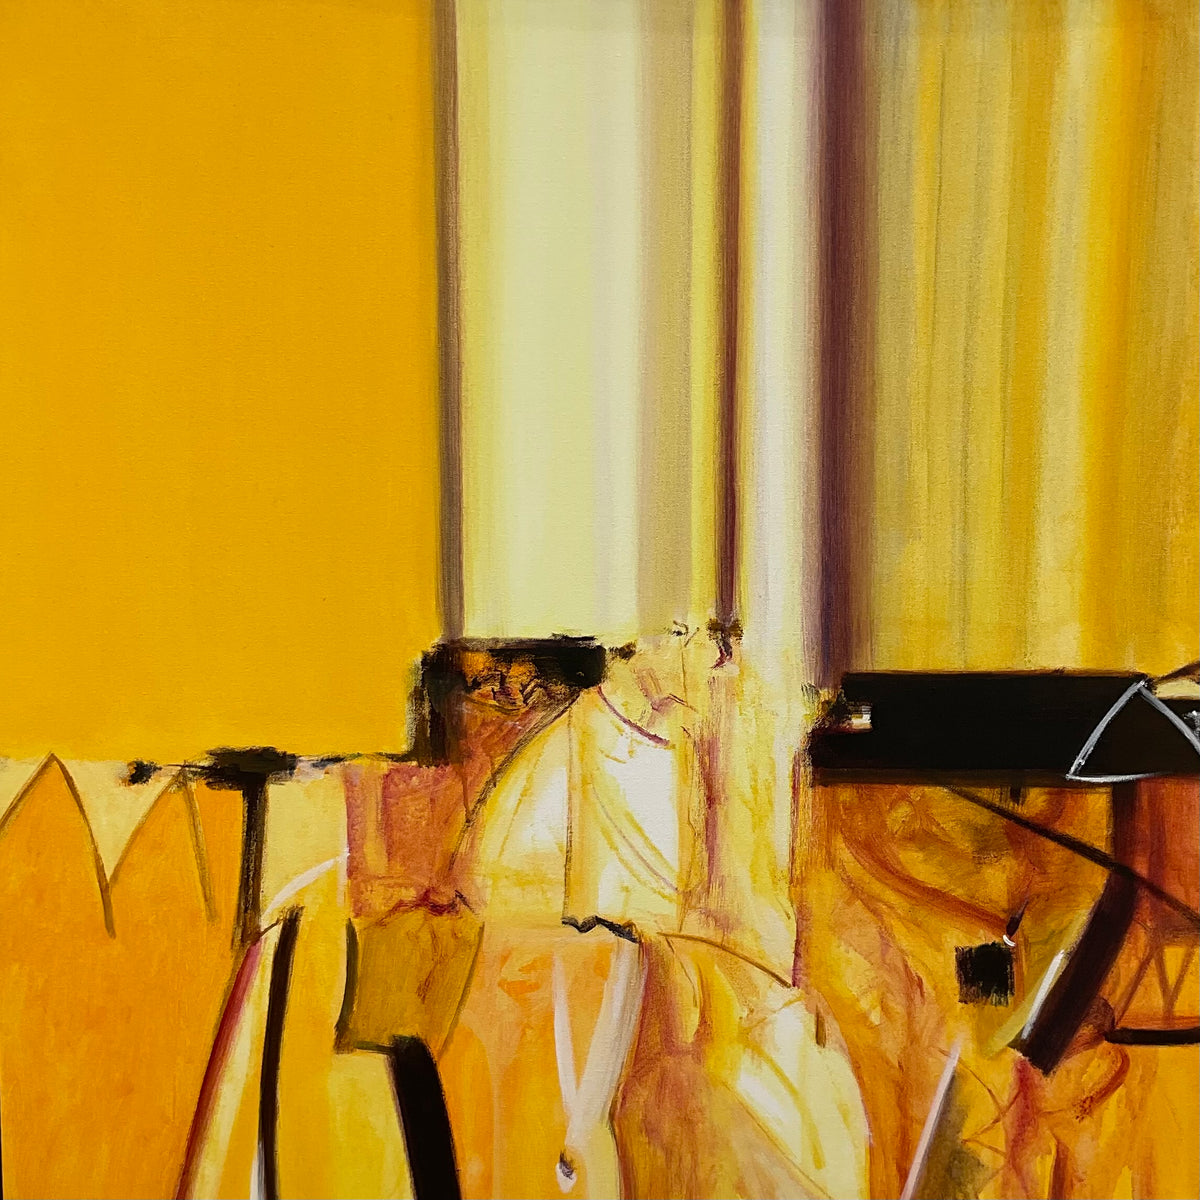 Glowing yellow abstract by Chaitan Bhosale